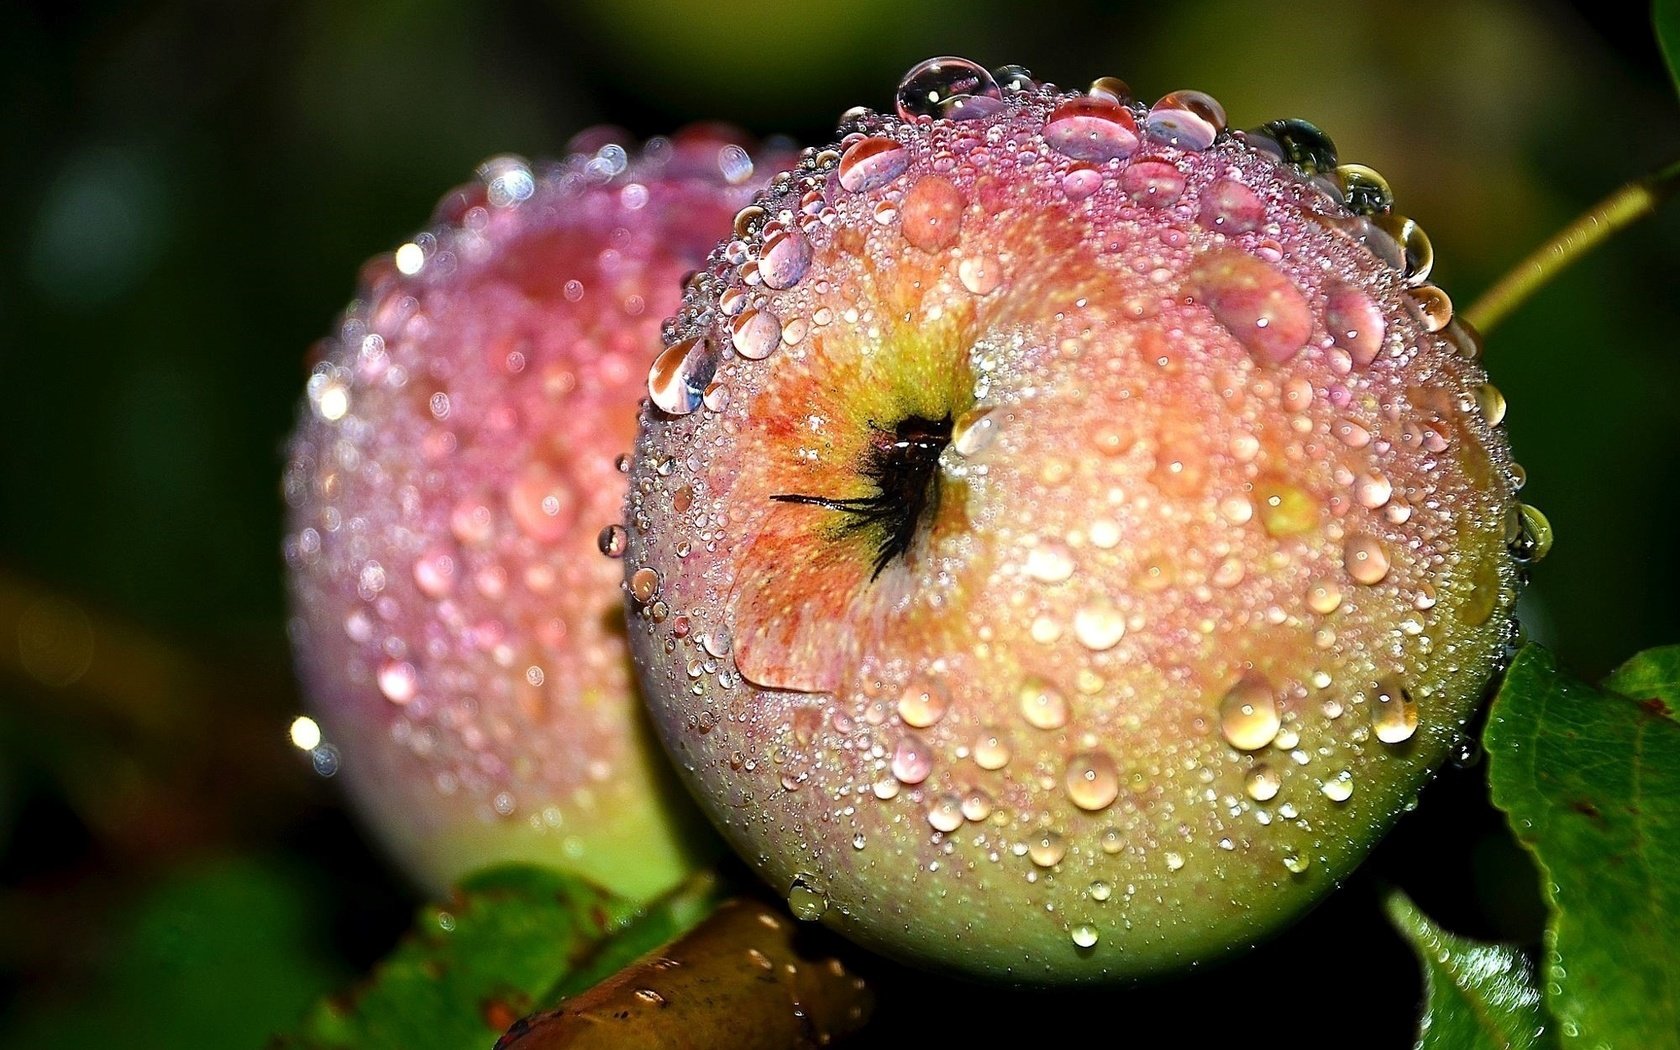 яблоко трава роса капли Apple grass Rosa drops бесплатно